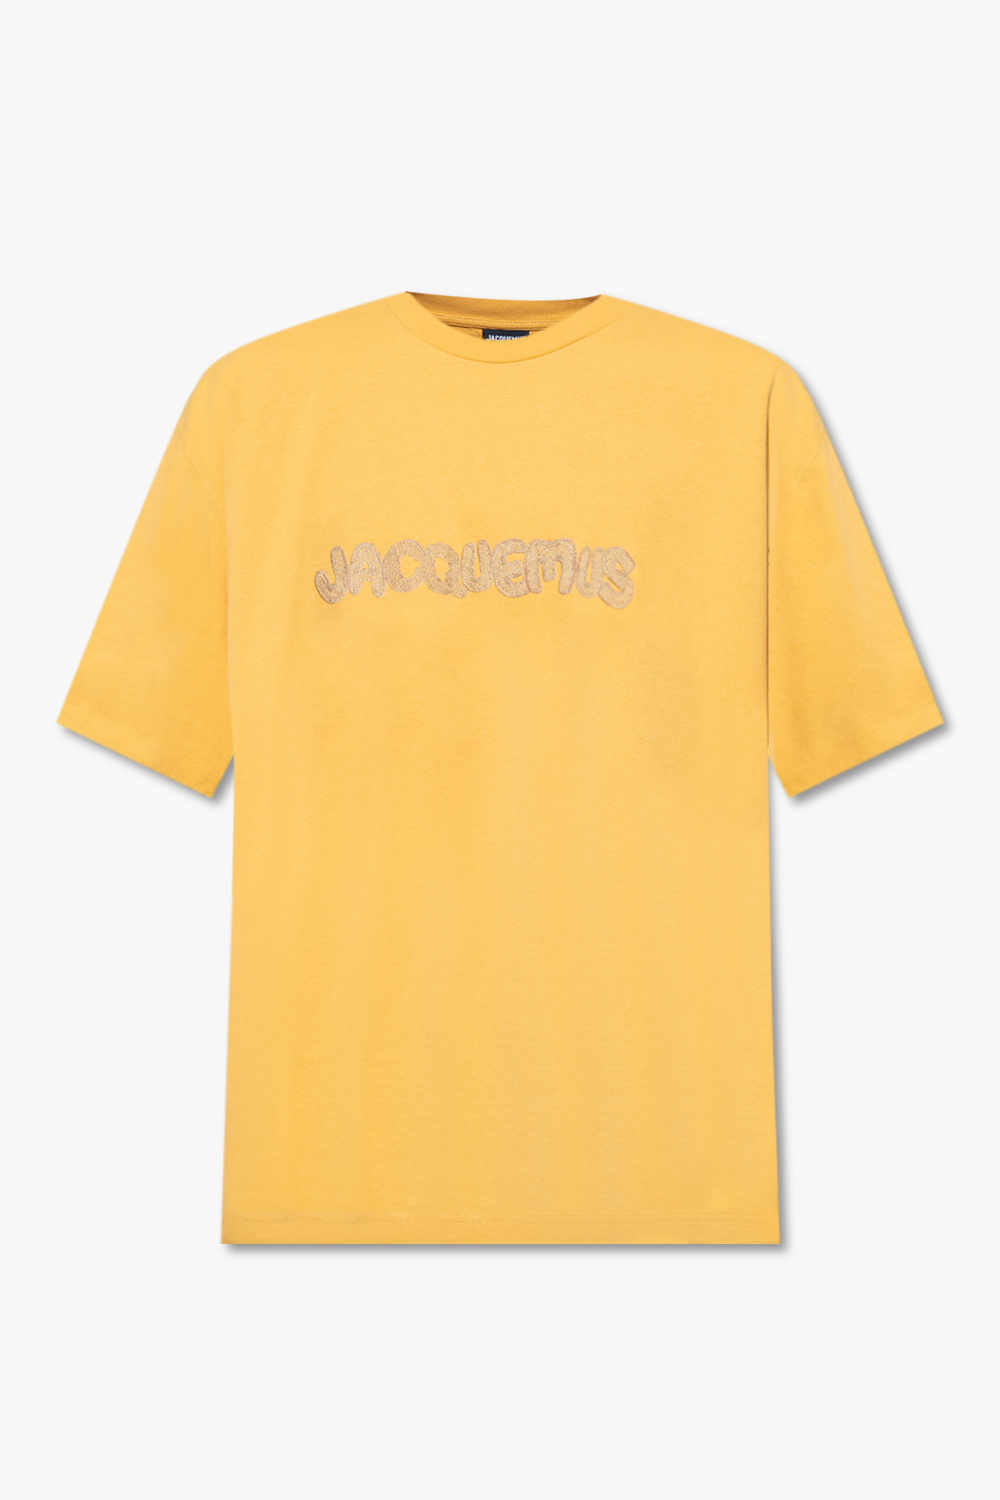 Jacquemus ‘Raphia’ T-shirt with logo